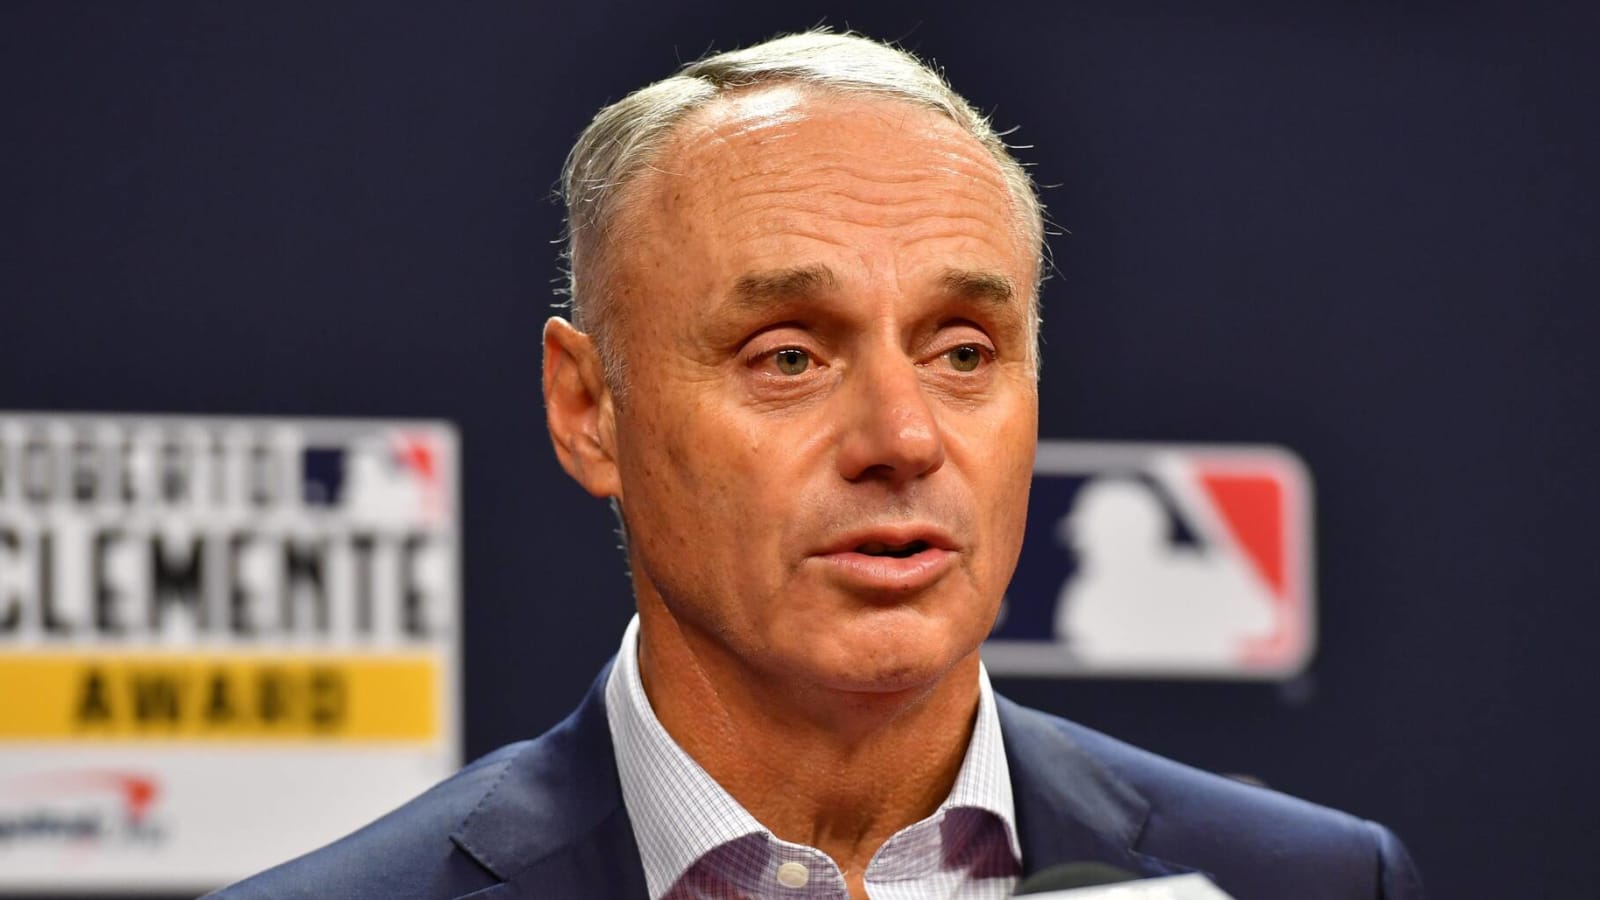 MLB, MLBPA reach tentative agreement on CBA for minor leaguers